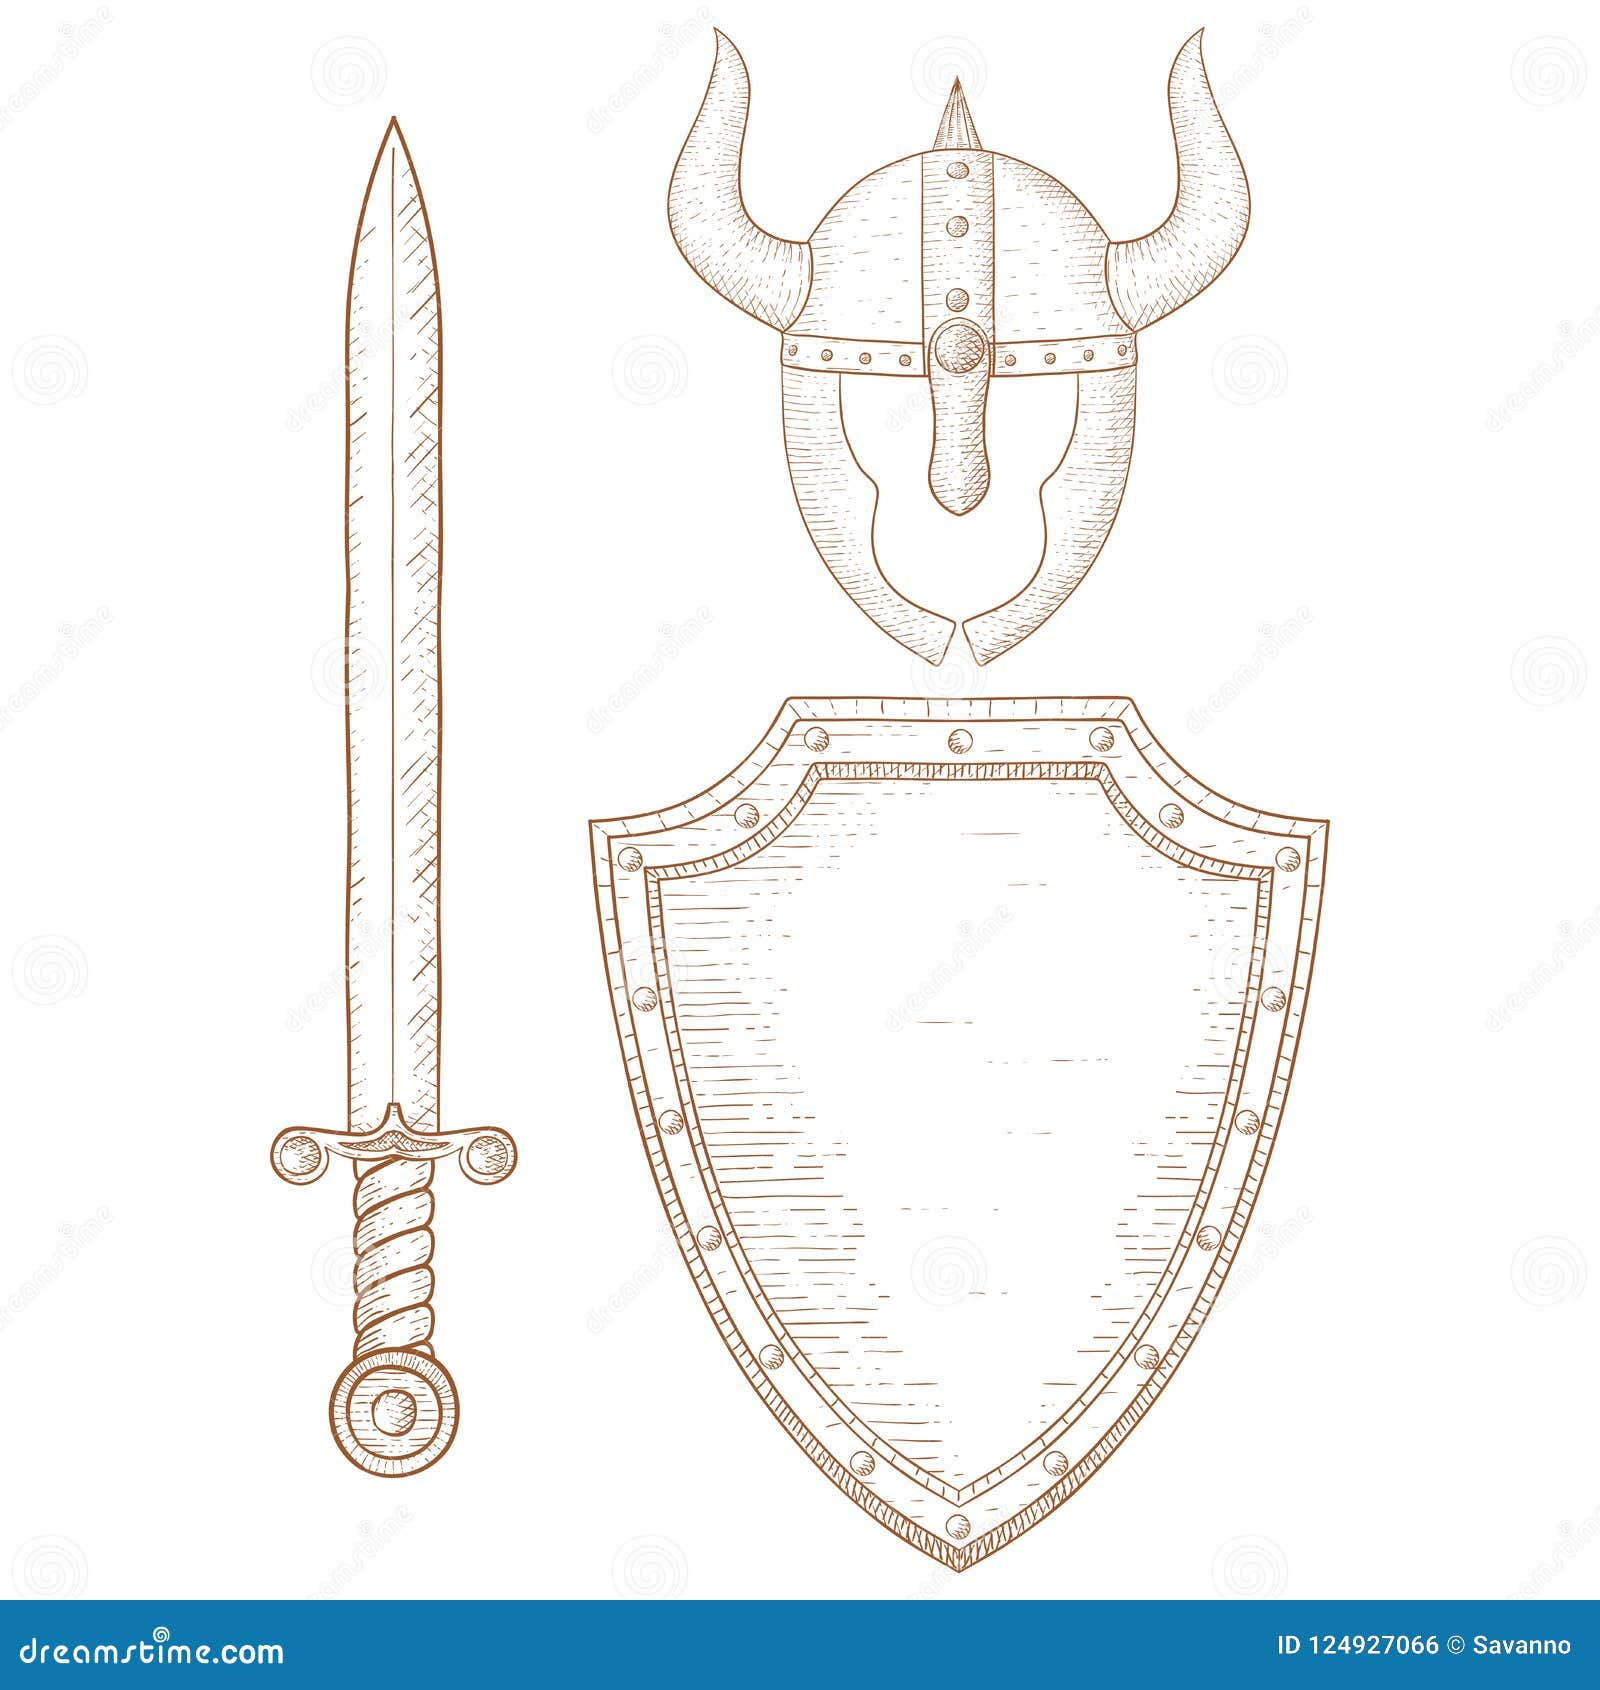 Premium Vector  Sword and shield illustration